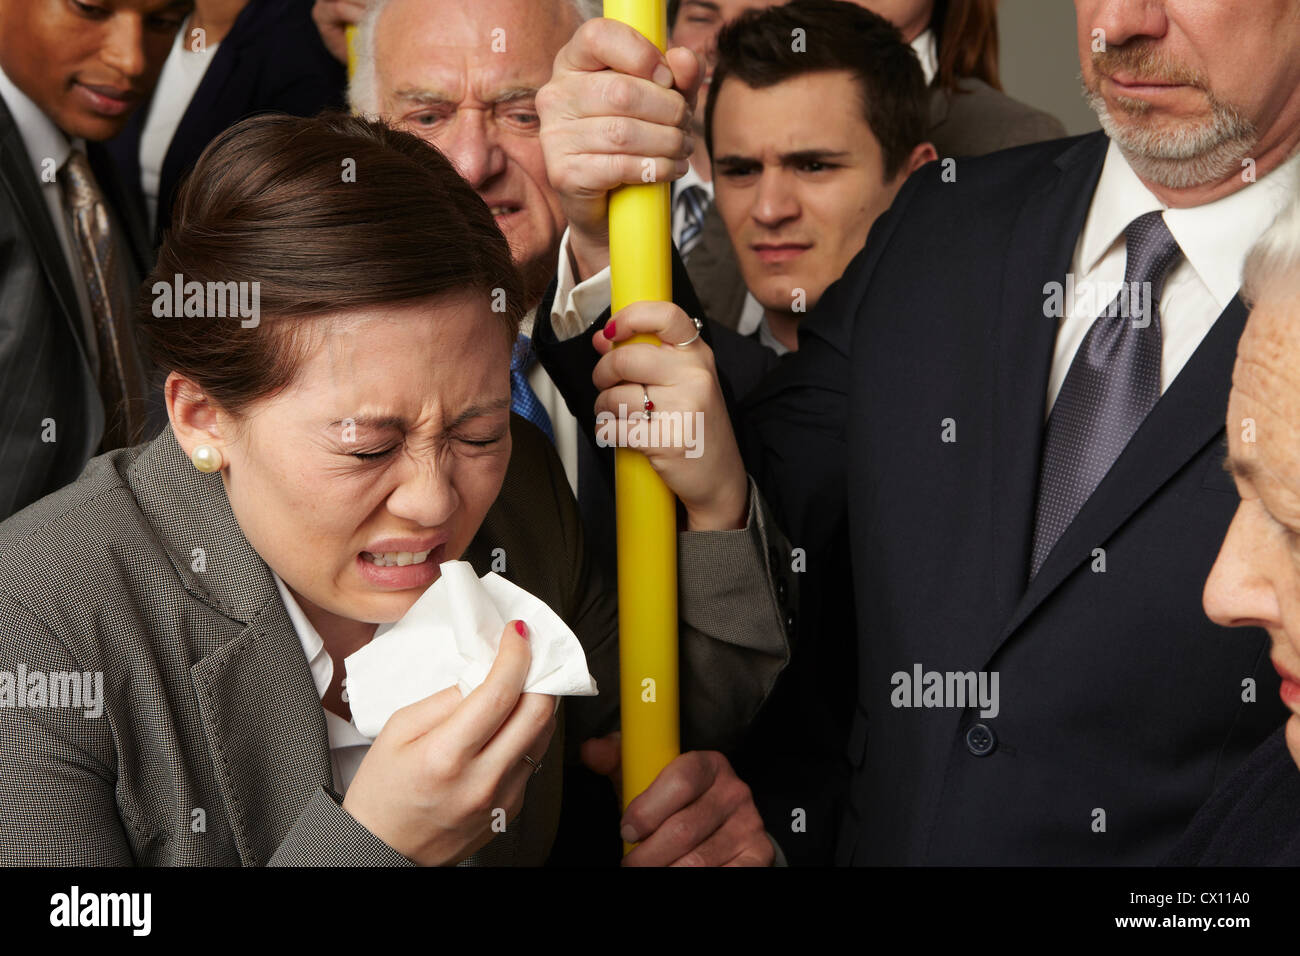 Businesswoman sneezing on subway train Stock Photo